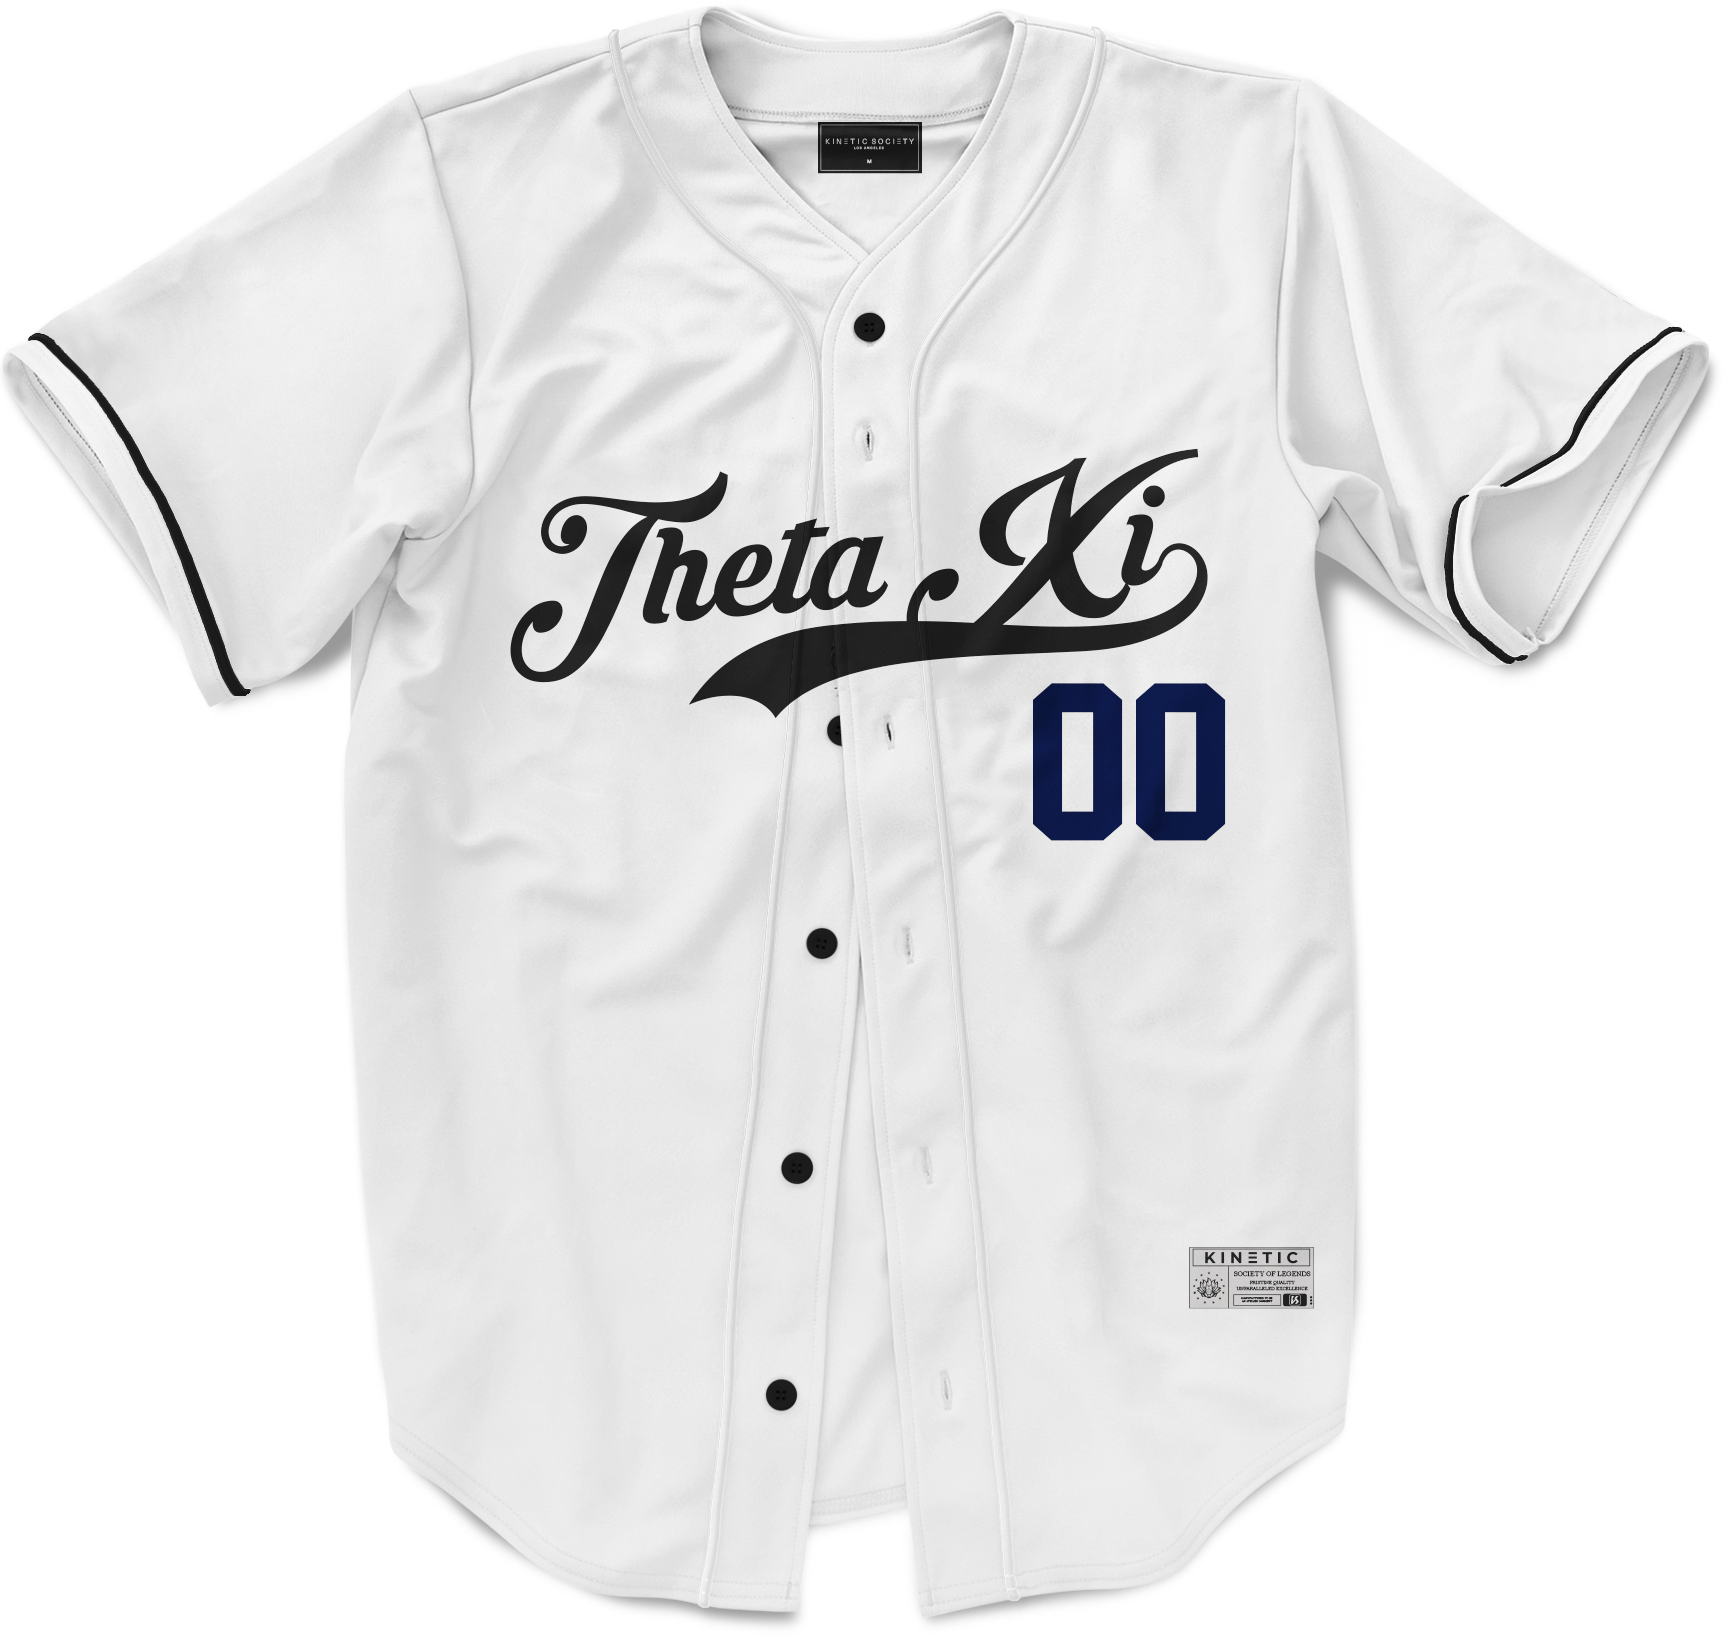 Theta Xi - Classic Ballpark Blue Baseball Jersey